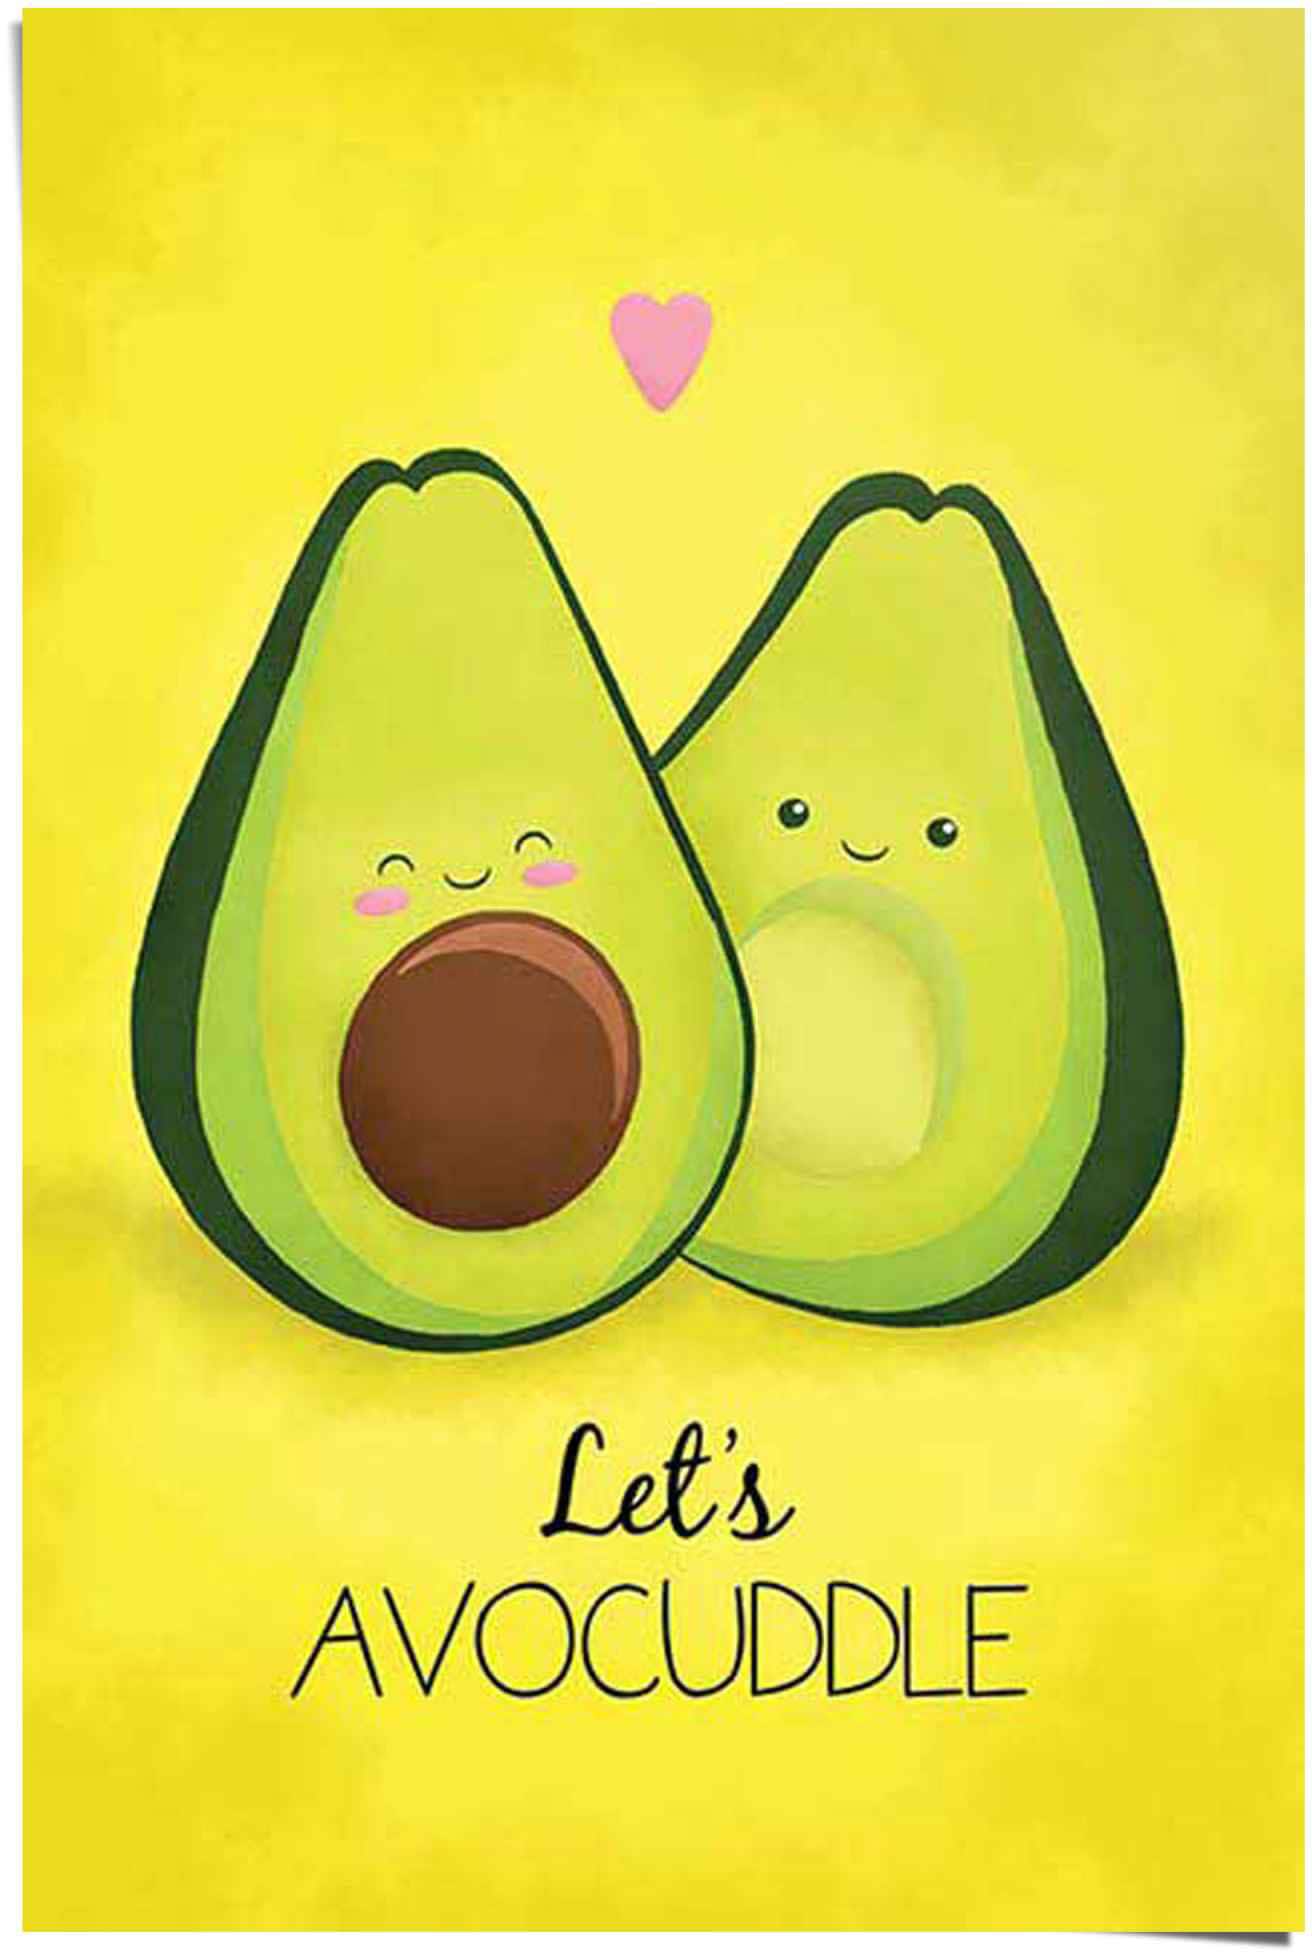 Reinders! Poster »Avocado avocuddle«, (1 let´s günstig St.) kaufen